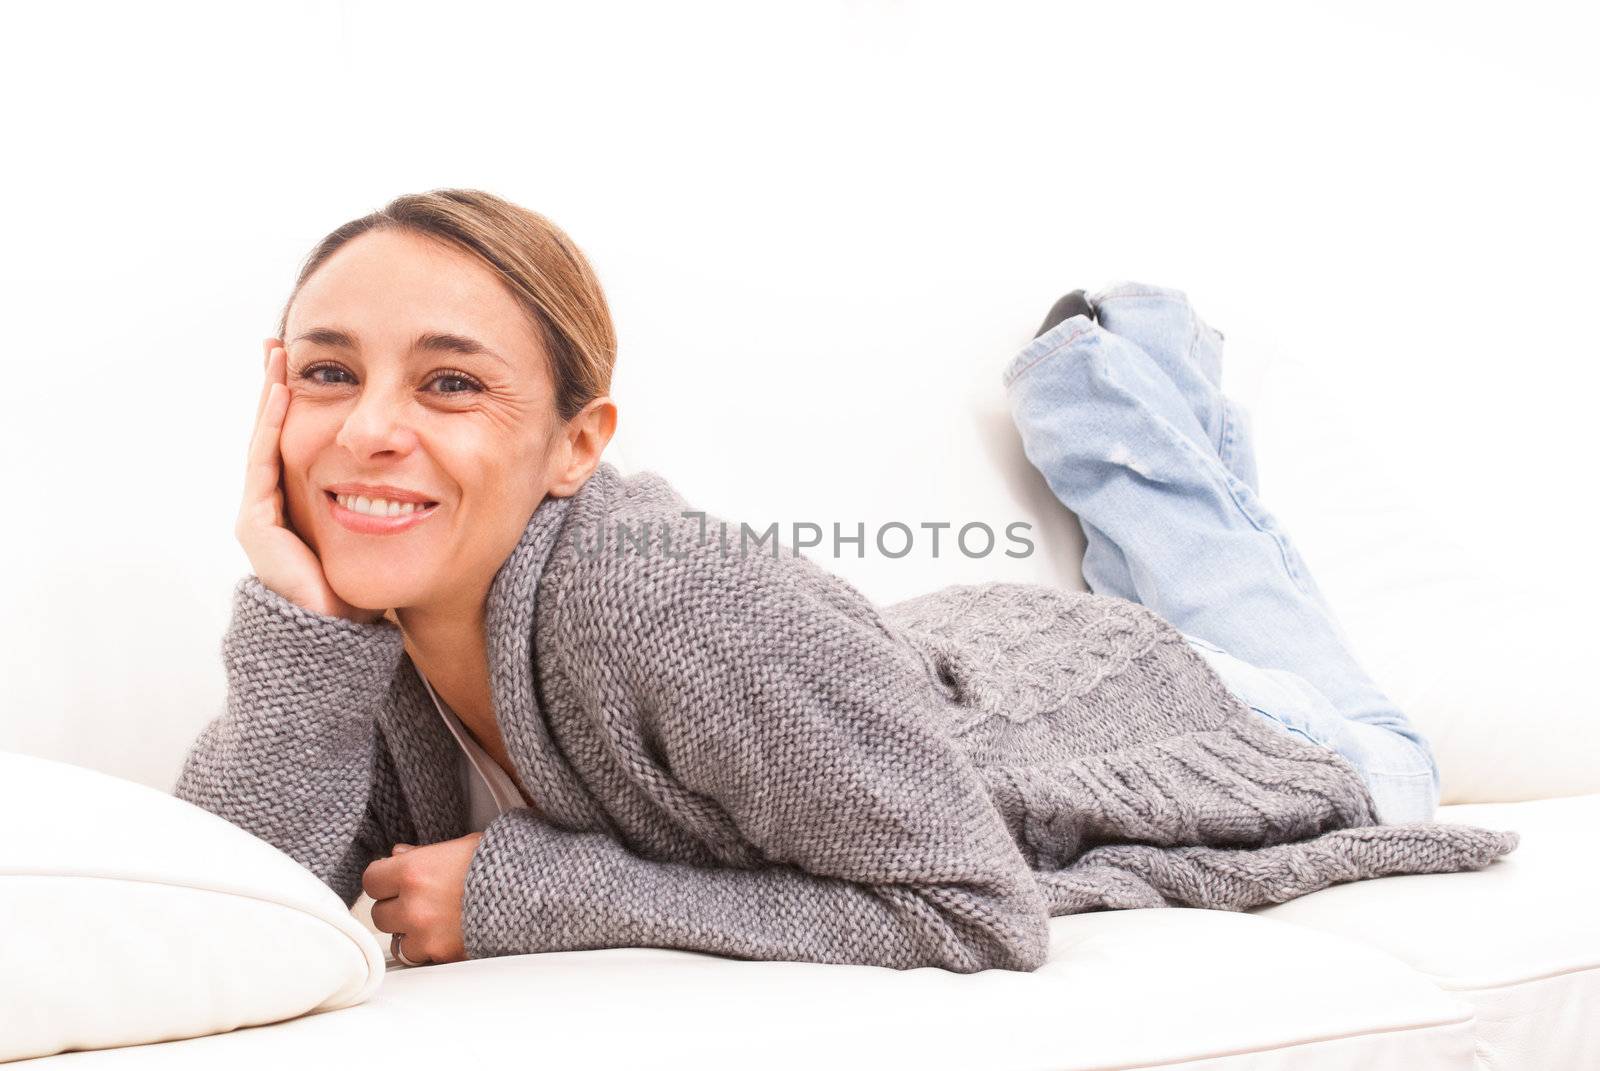 woman smiling by matteobragaglio